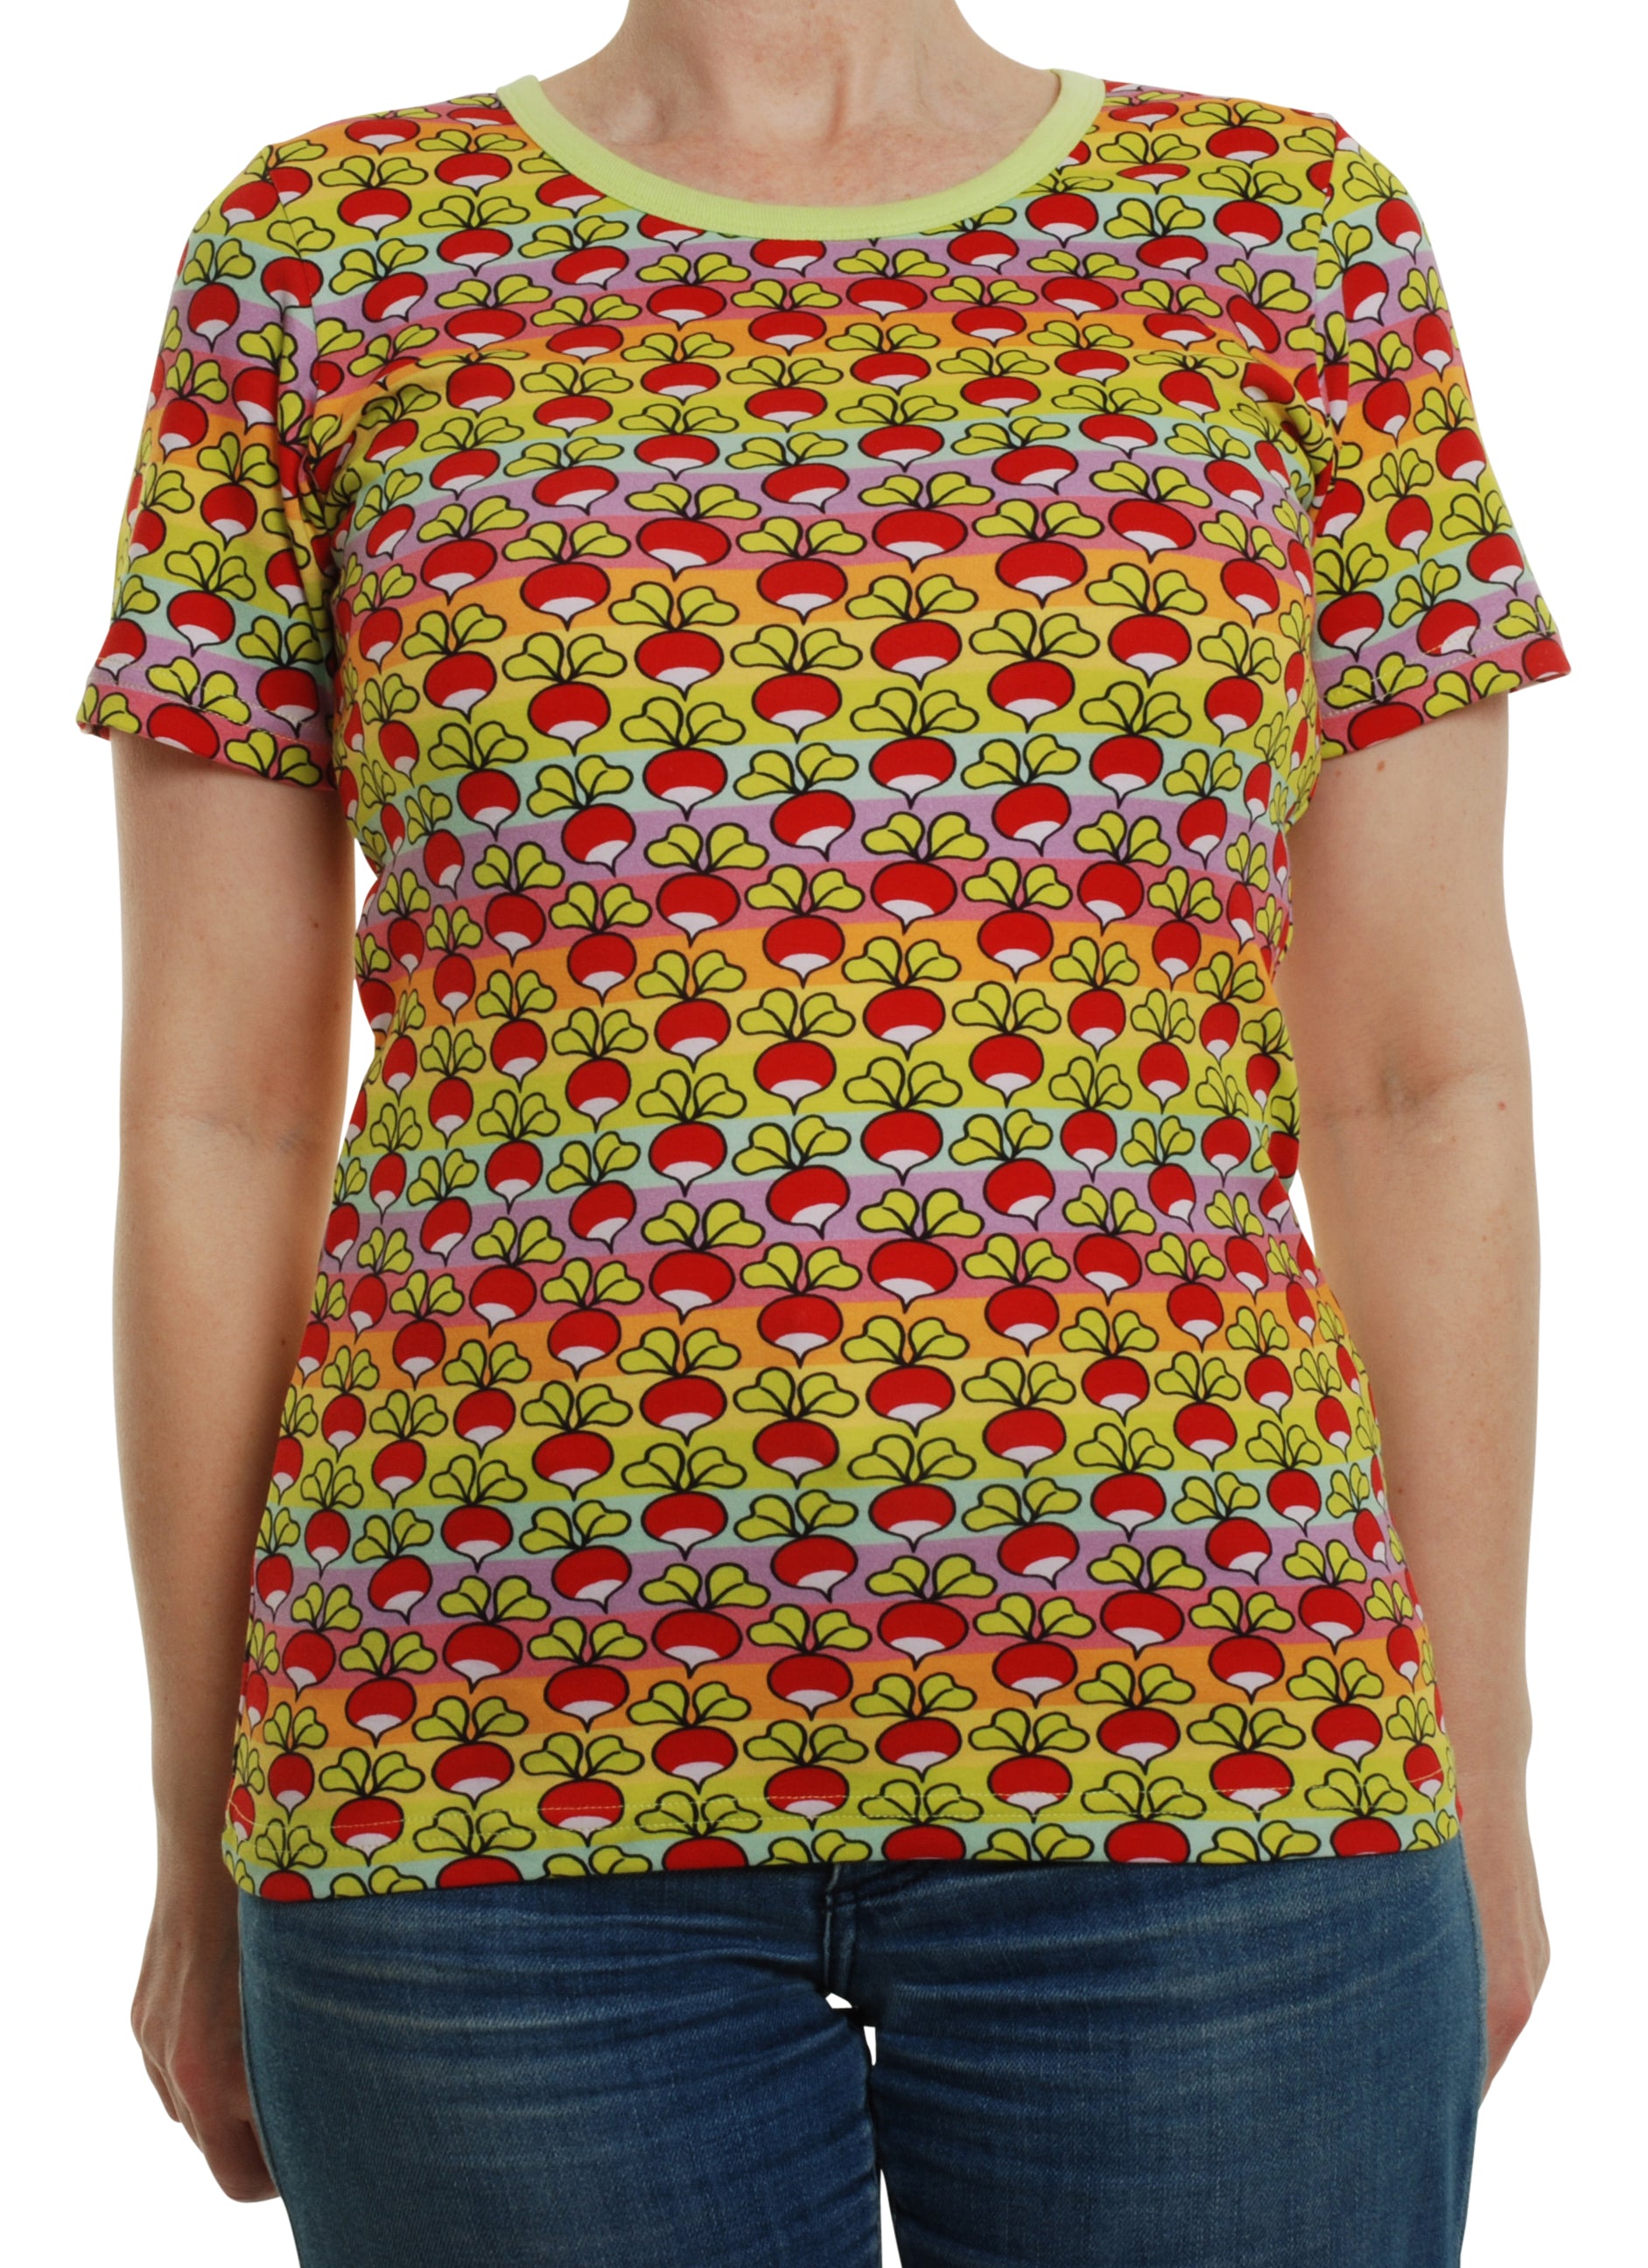 Adult T-shirt / Short Sleeve Top Radish Rainbow Stripe - Duns Sweden